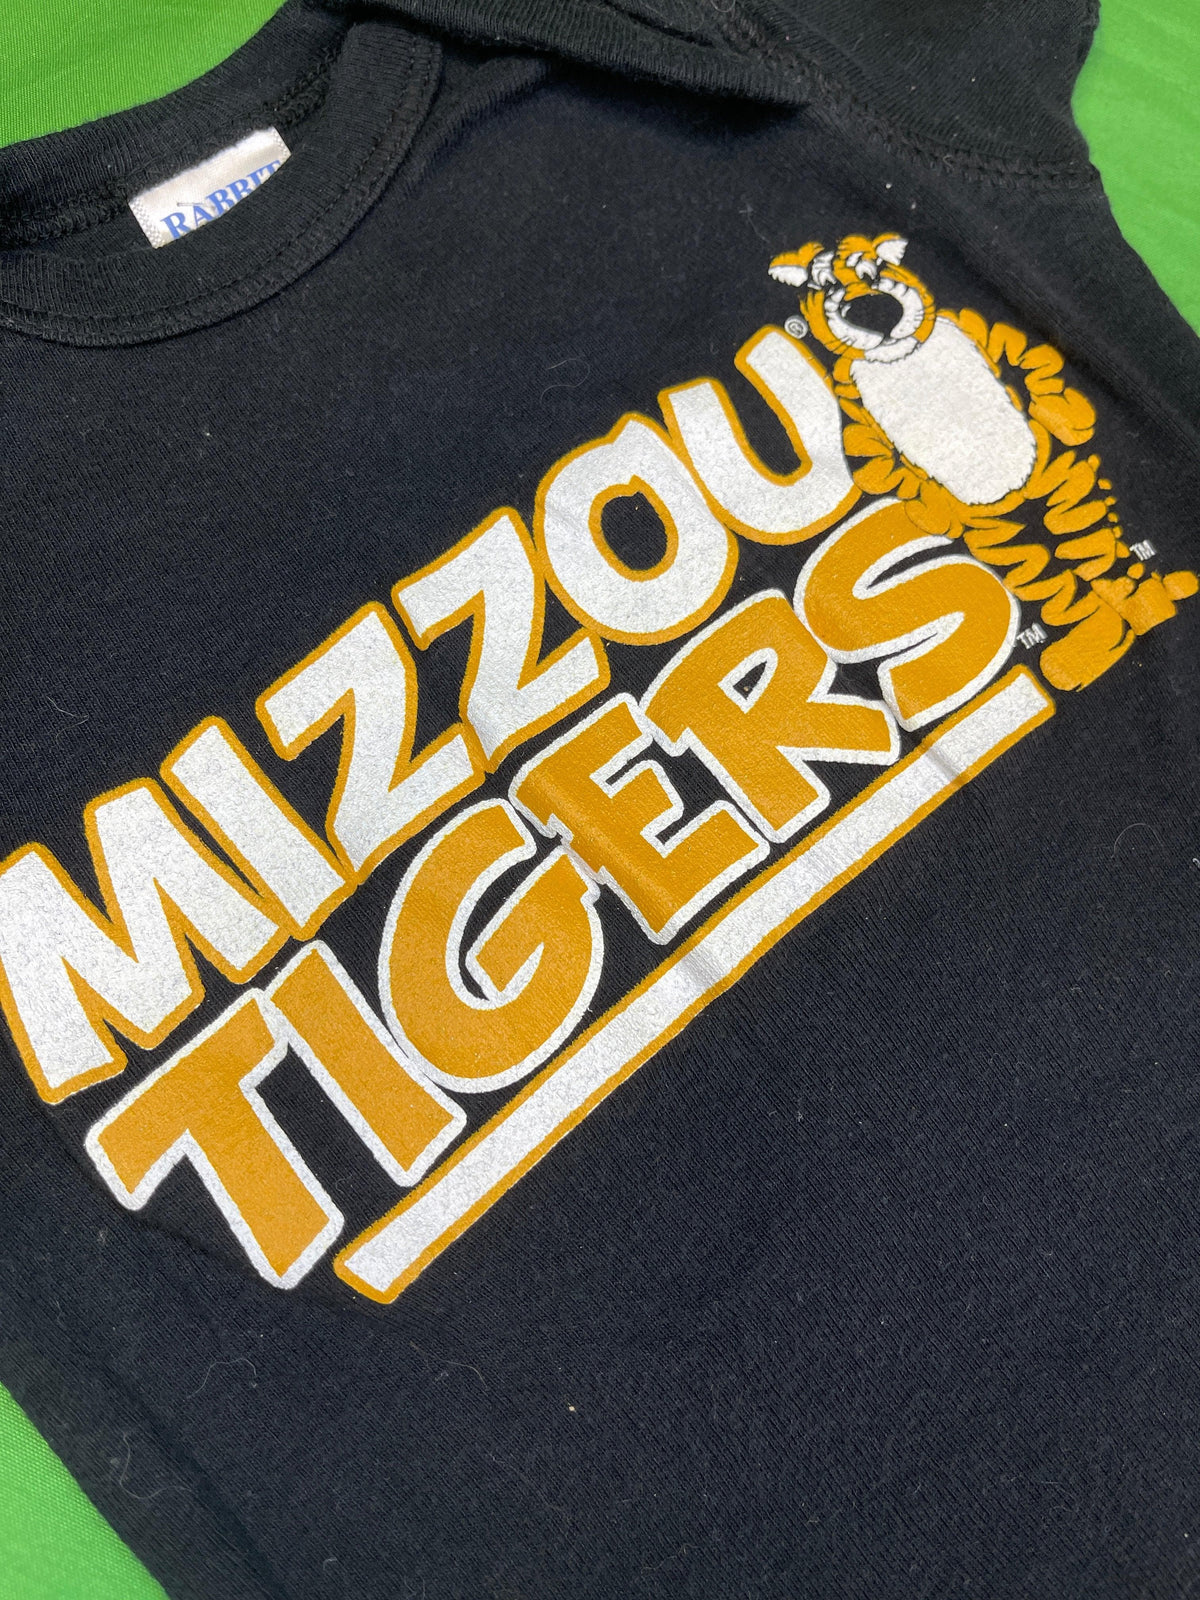 NCAA Missouri Tigers Black Bodysuit 6 months